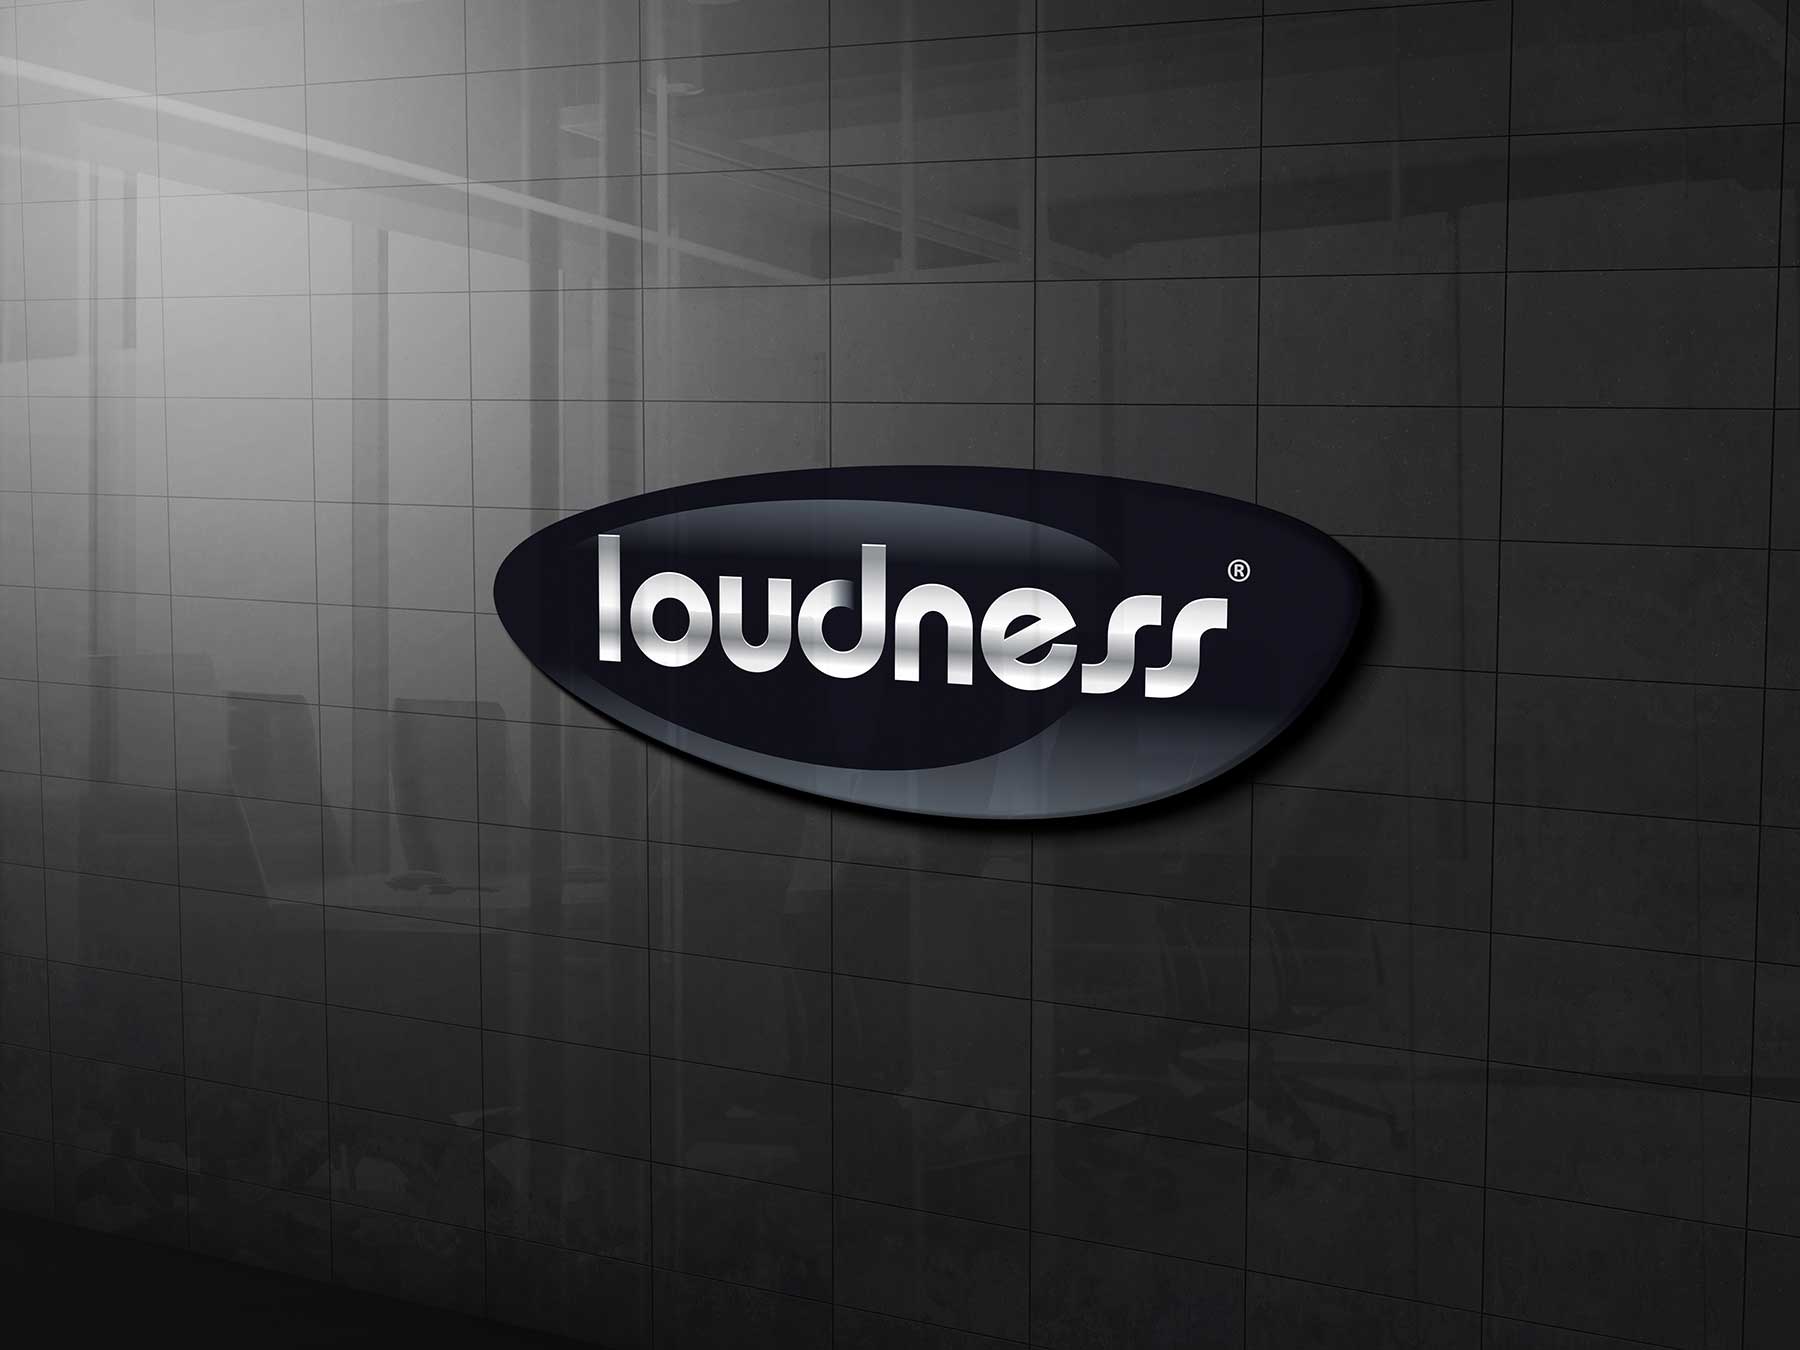 Logo Loudness